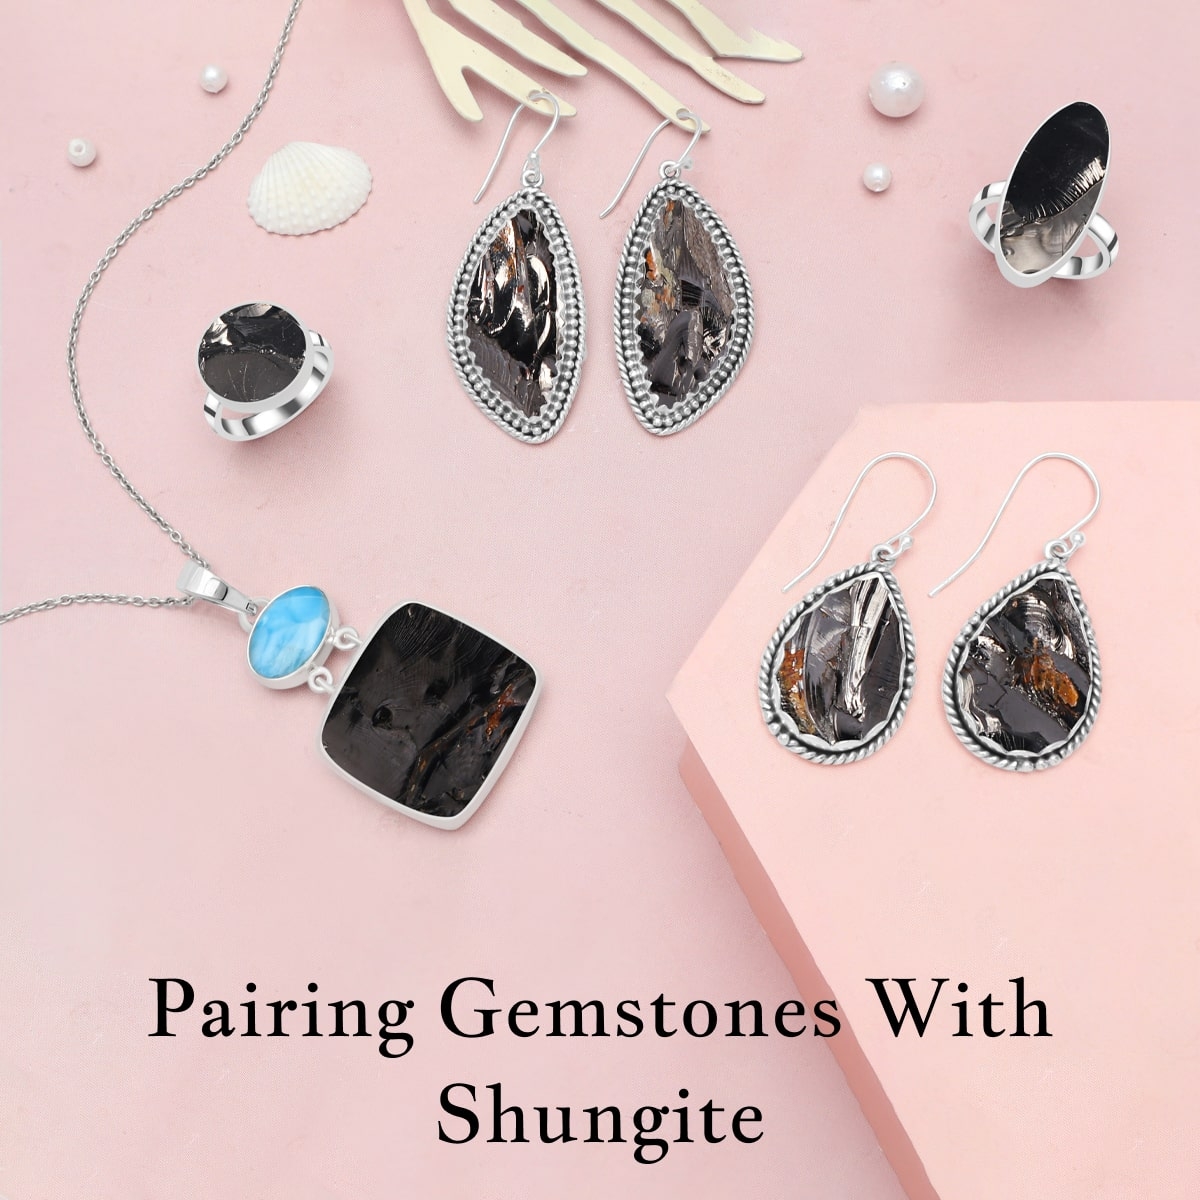 Gemstones to pair with the Shungite